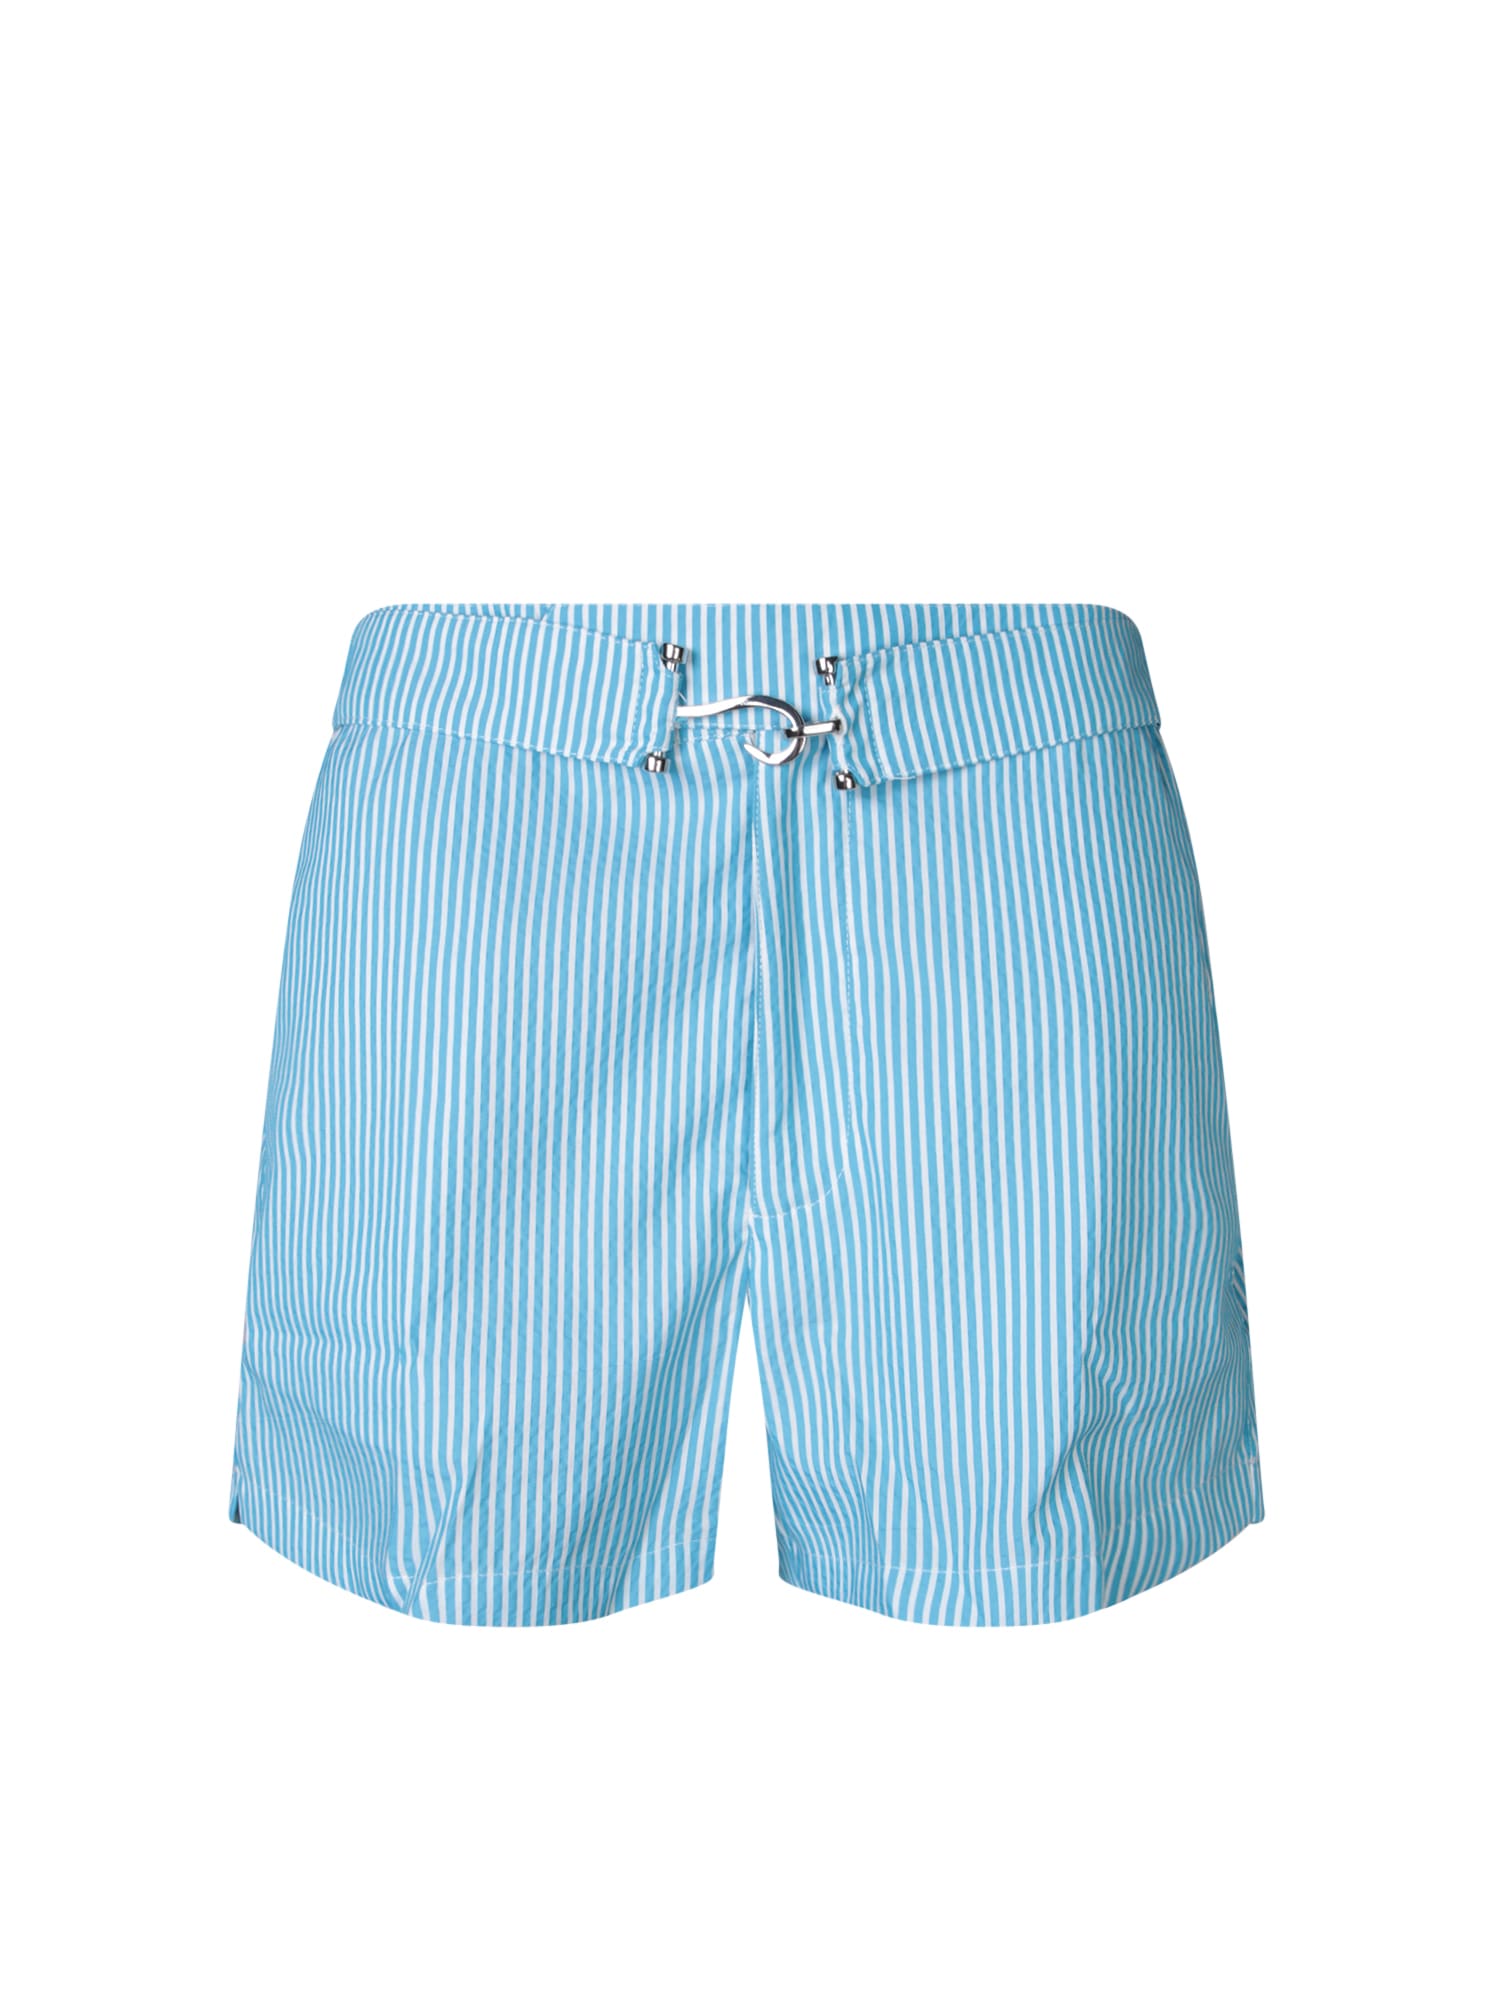 Comporta Swim Shorts Turquoise